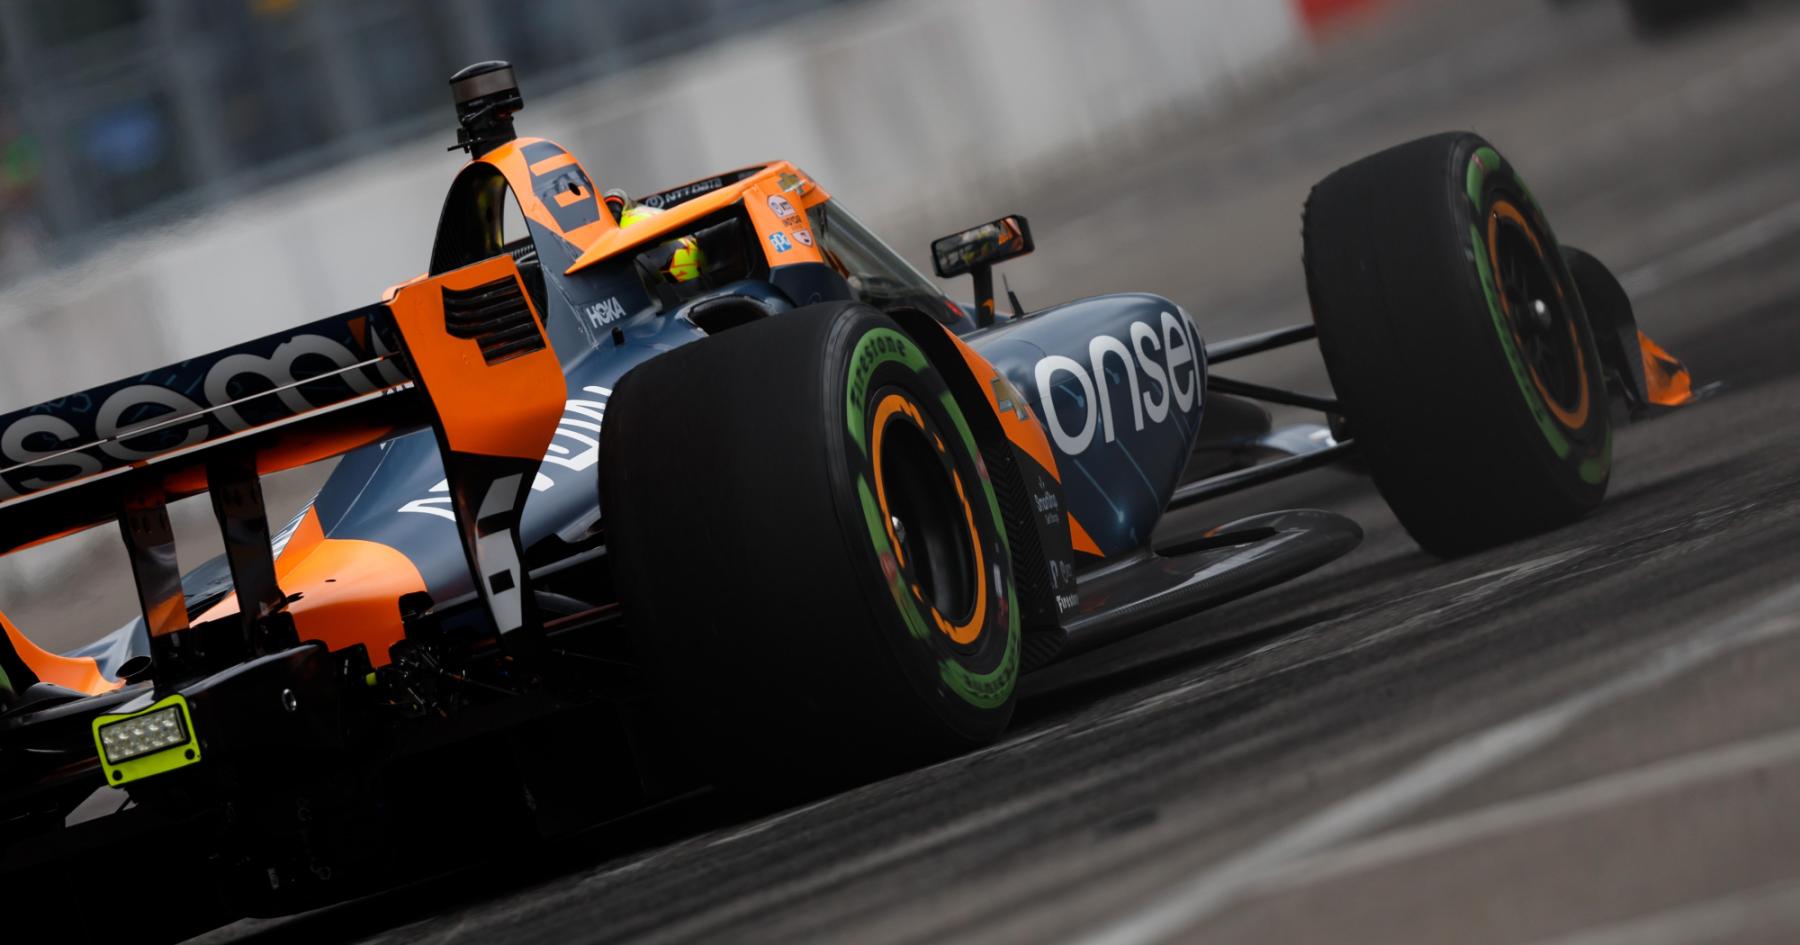 The McLaren Threat: Catalyst for Transformation